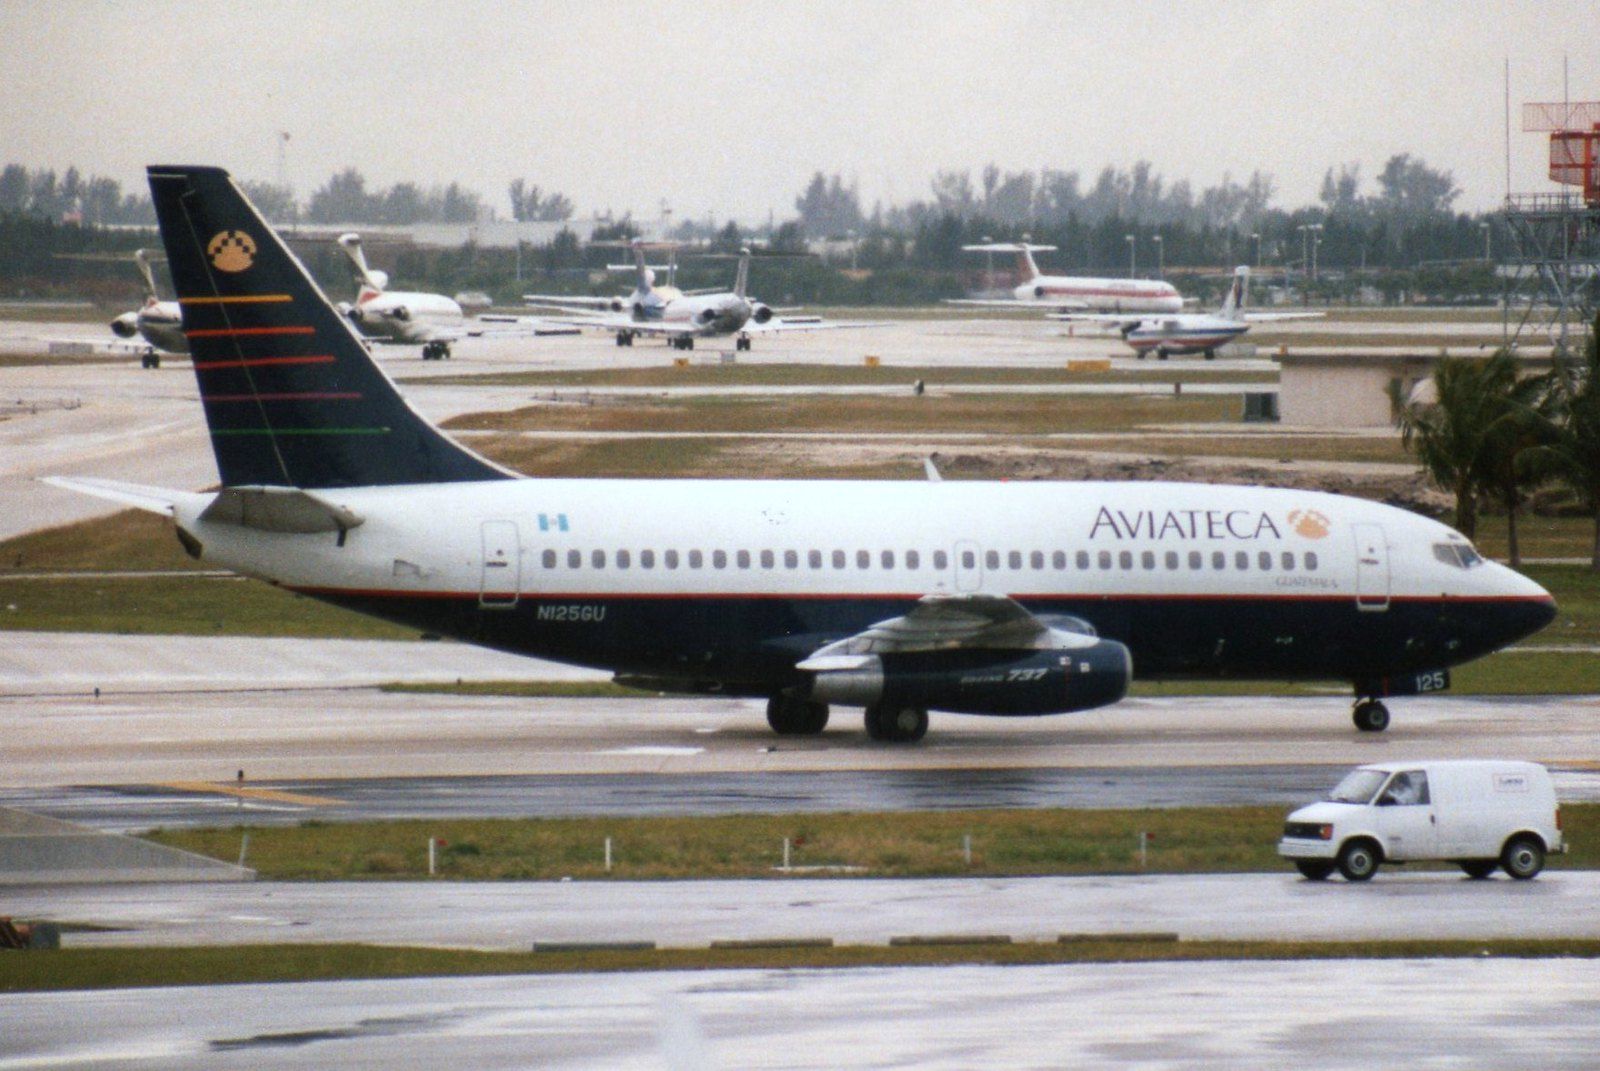 Aviateca Boeing 737 parked on apron